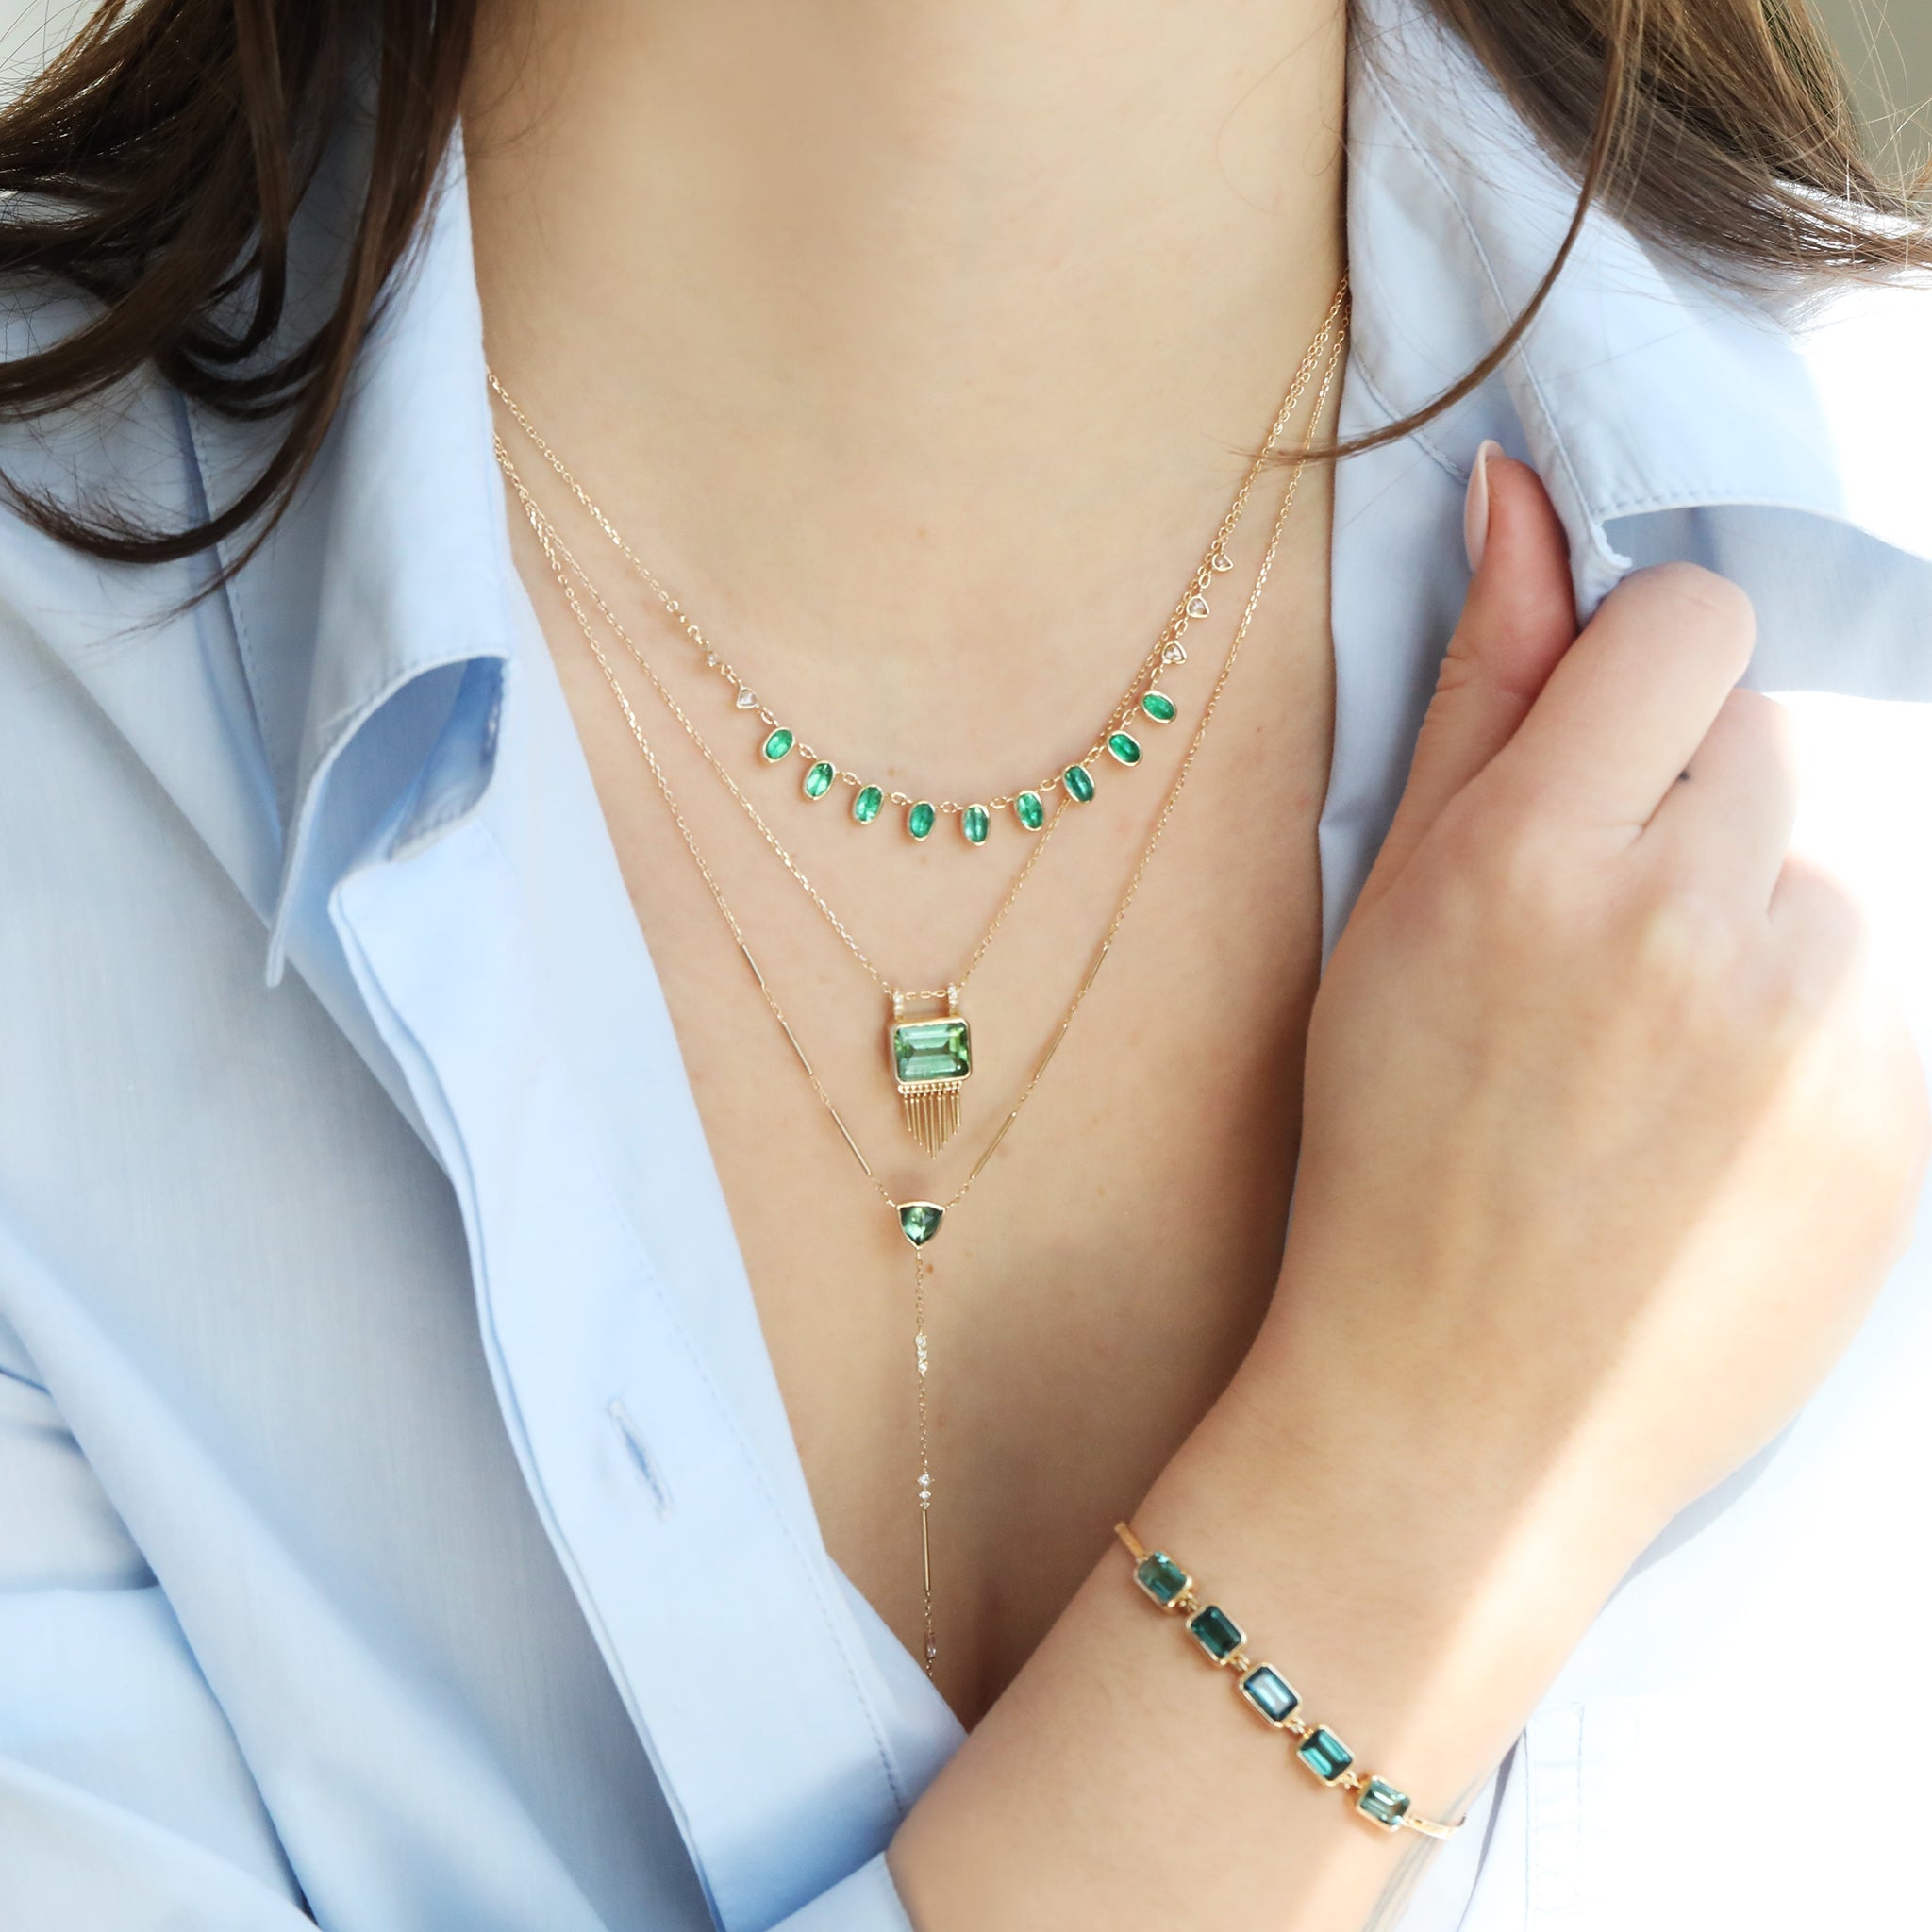 Green Tourmaline Lariat Bar Necklace with Diamond Details - Peridot Fine Jewelry - Celine Daoust